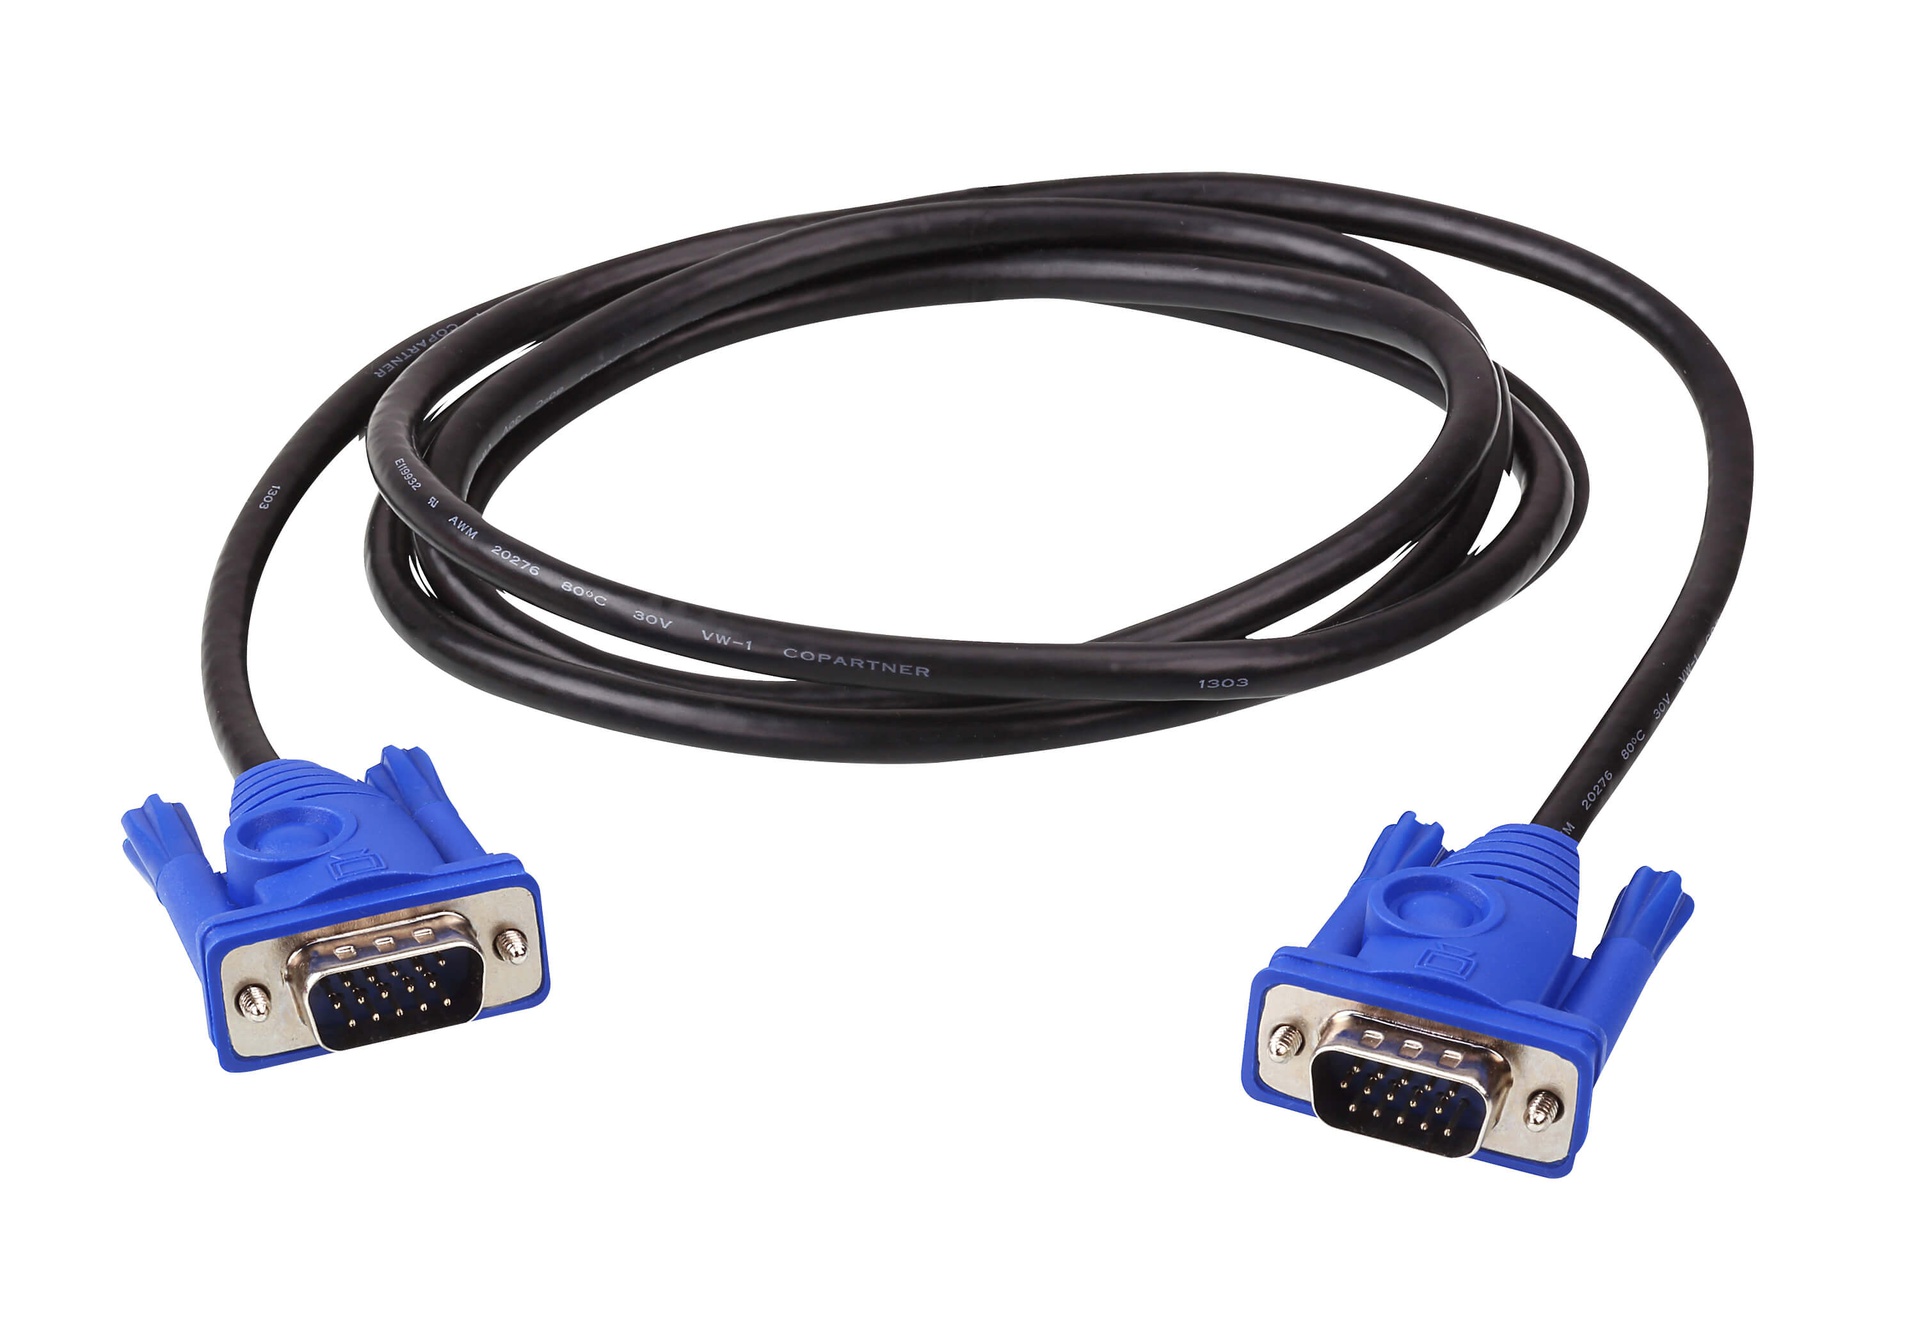 VGA Cable 3M